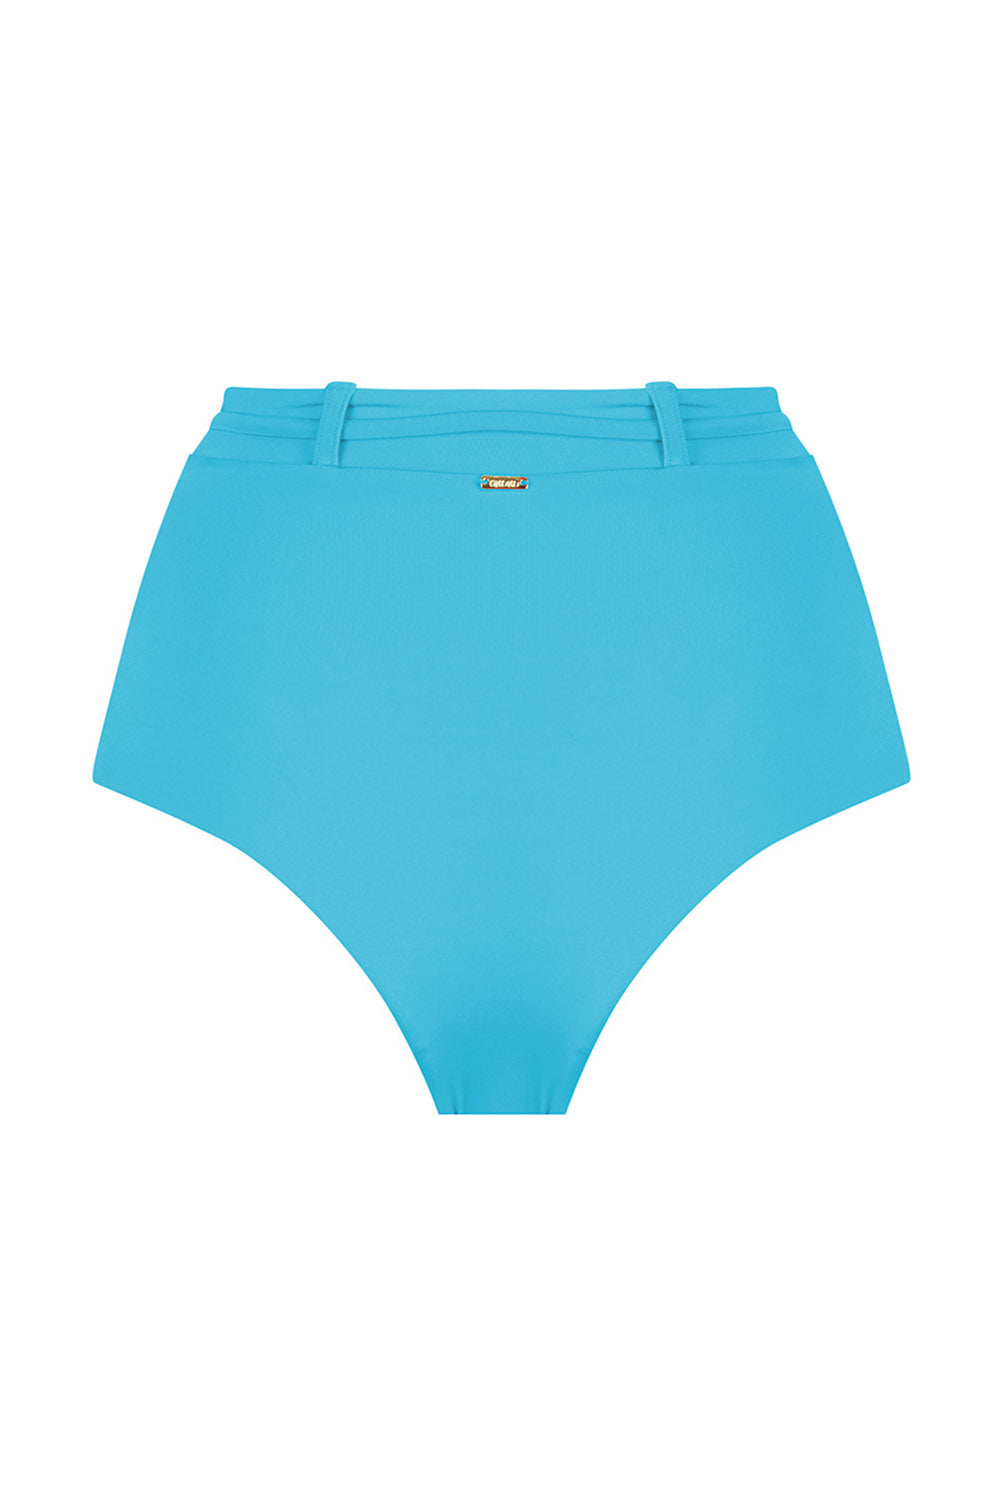 ASOS DESIGN 2 pack swim briefs in light blue/charcoal SAVE